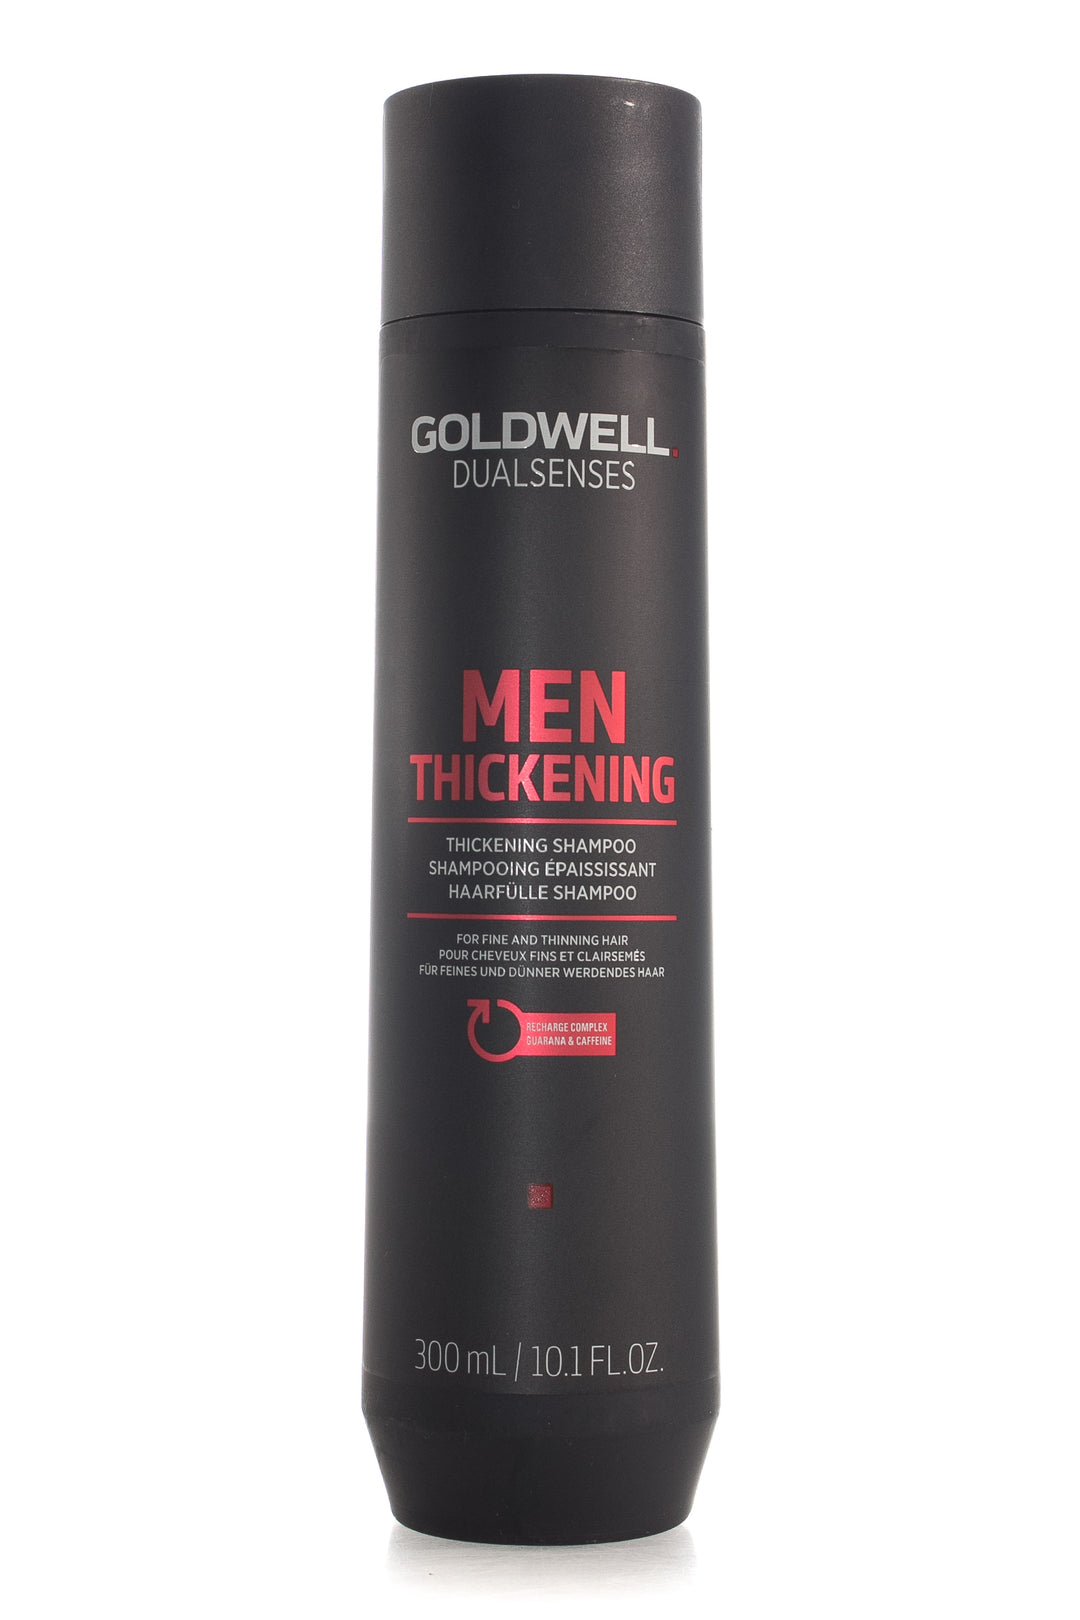 Product Image: Goldwell Dualsenses Men Thickening Shampoo - 300ml